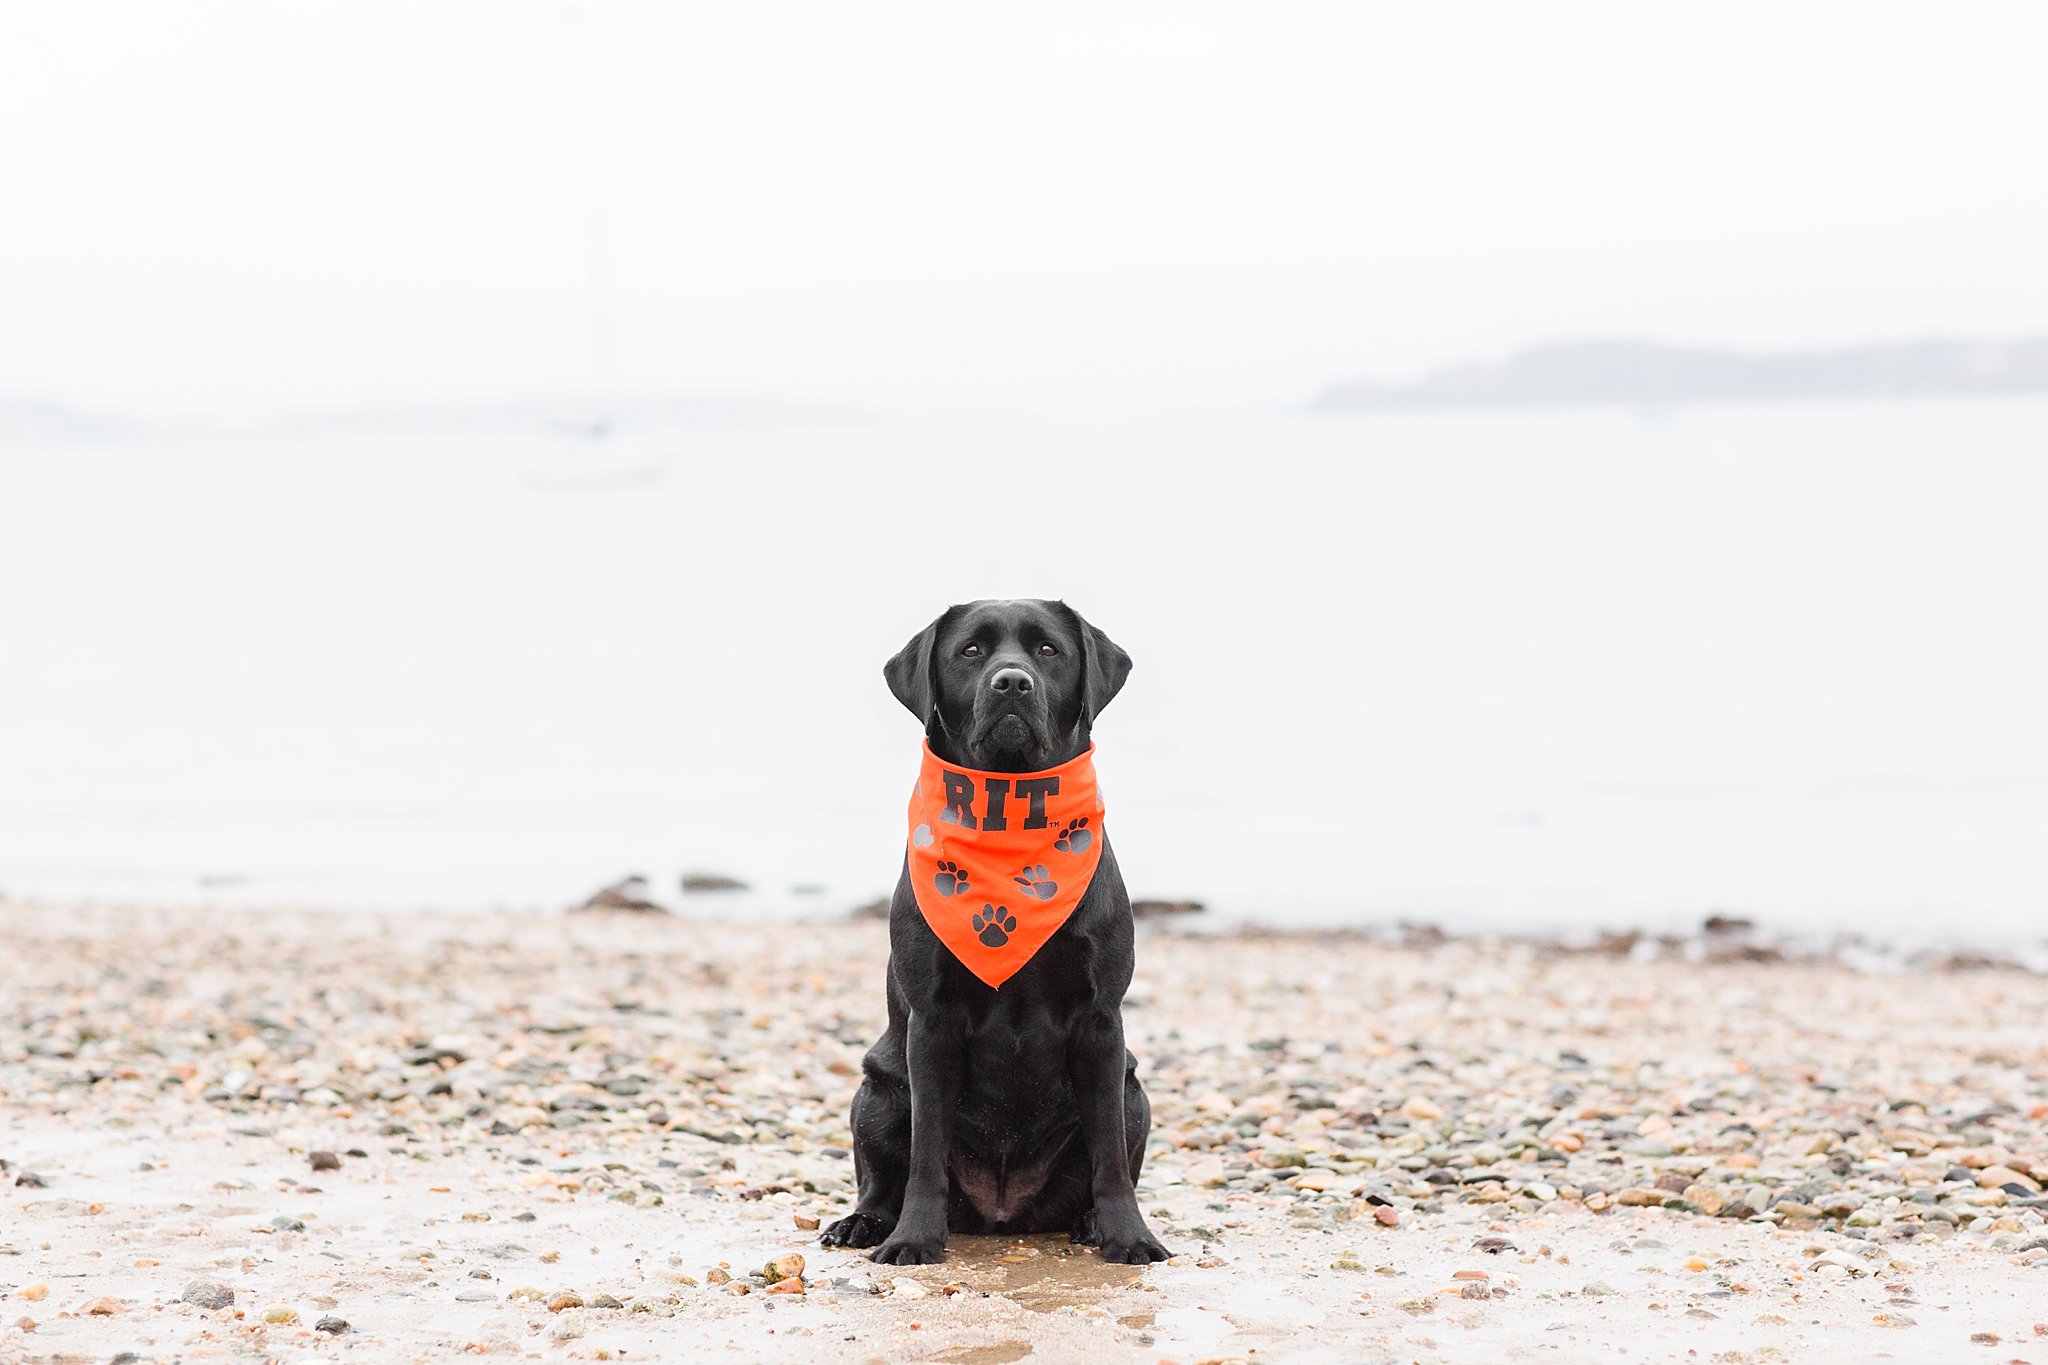 black labrador retriever sitting on a beach wearing an RIT college scarf